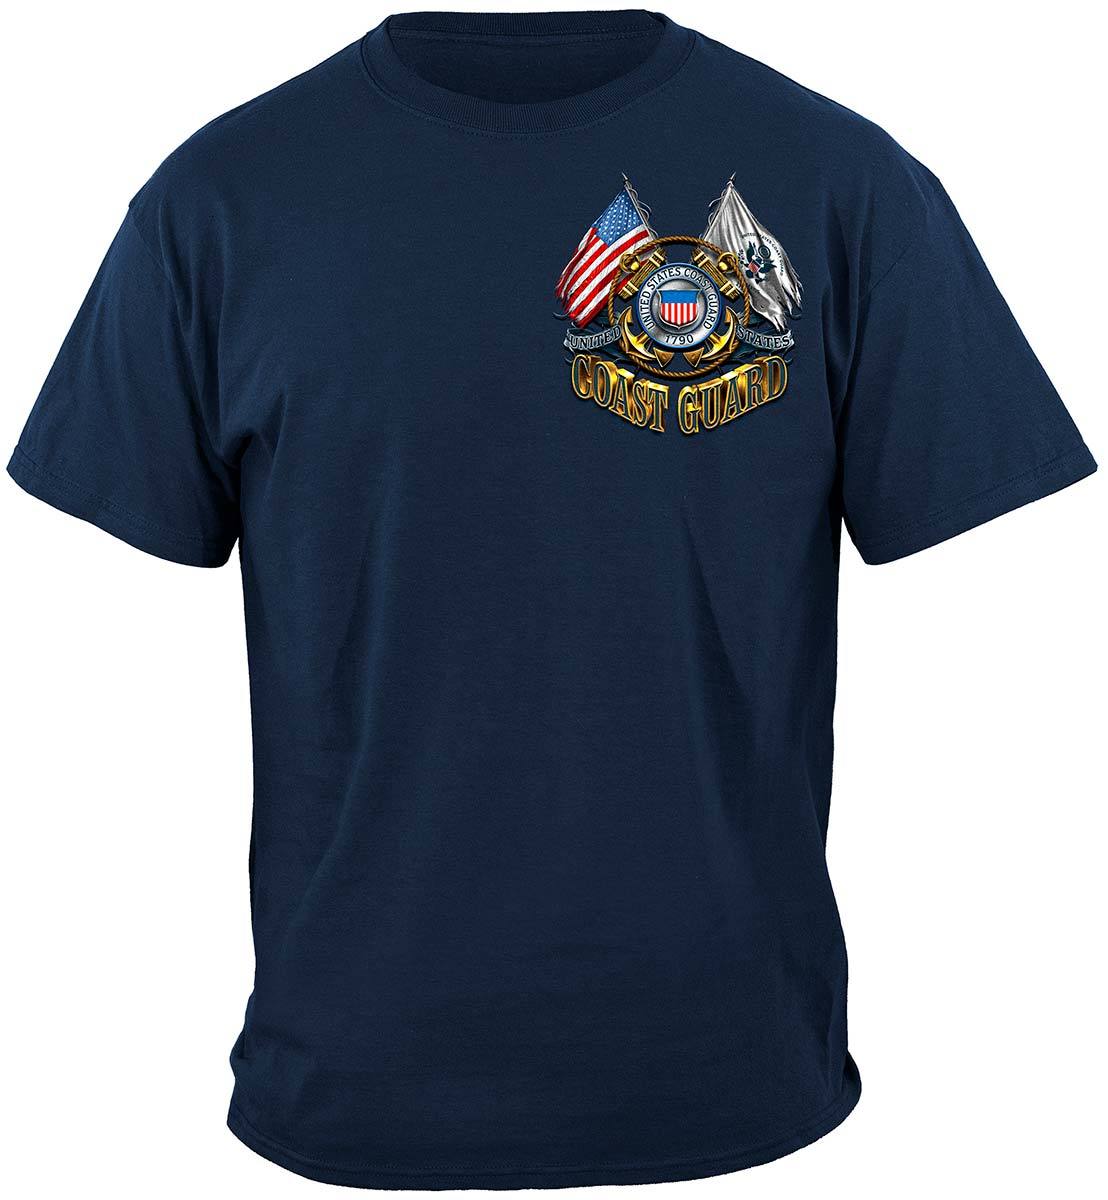 Double Flag Coast Guard Premium Long Sleeves